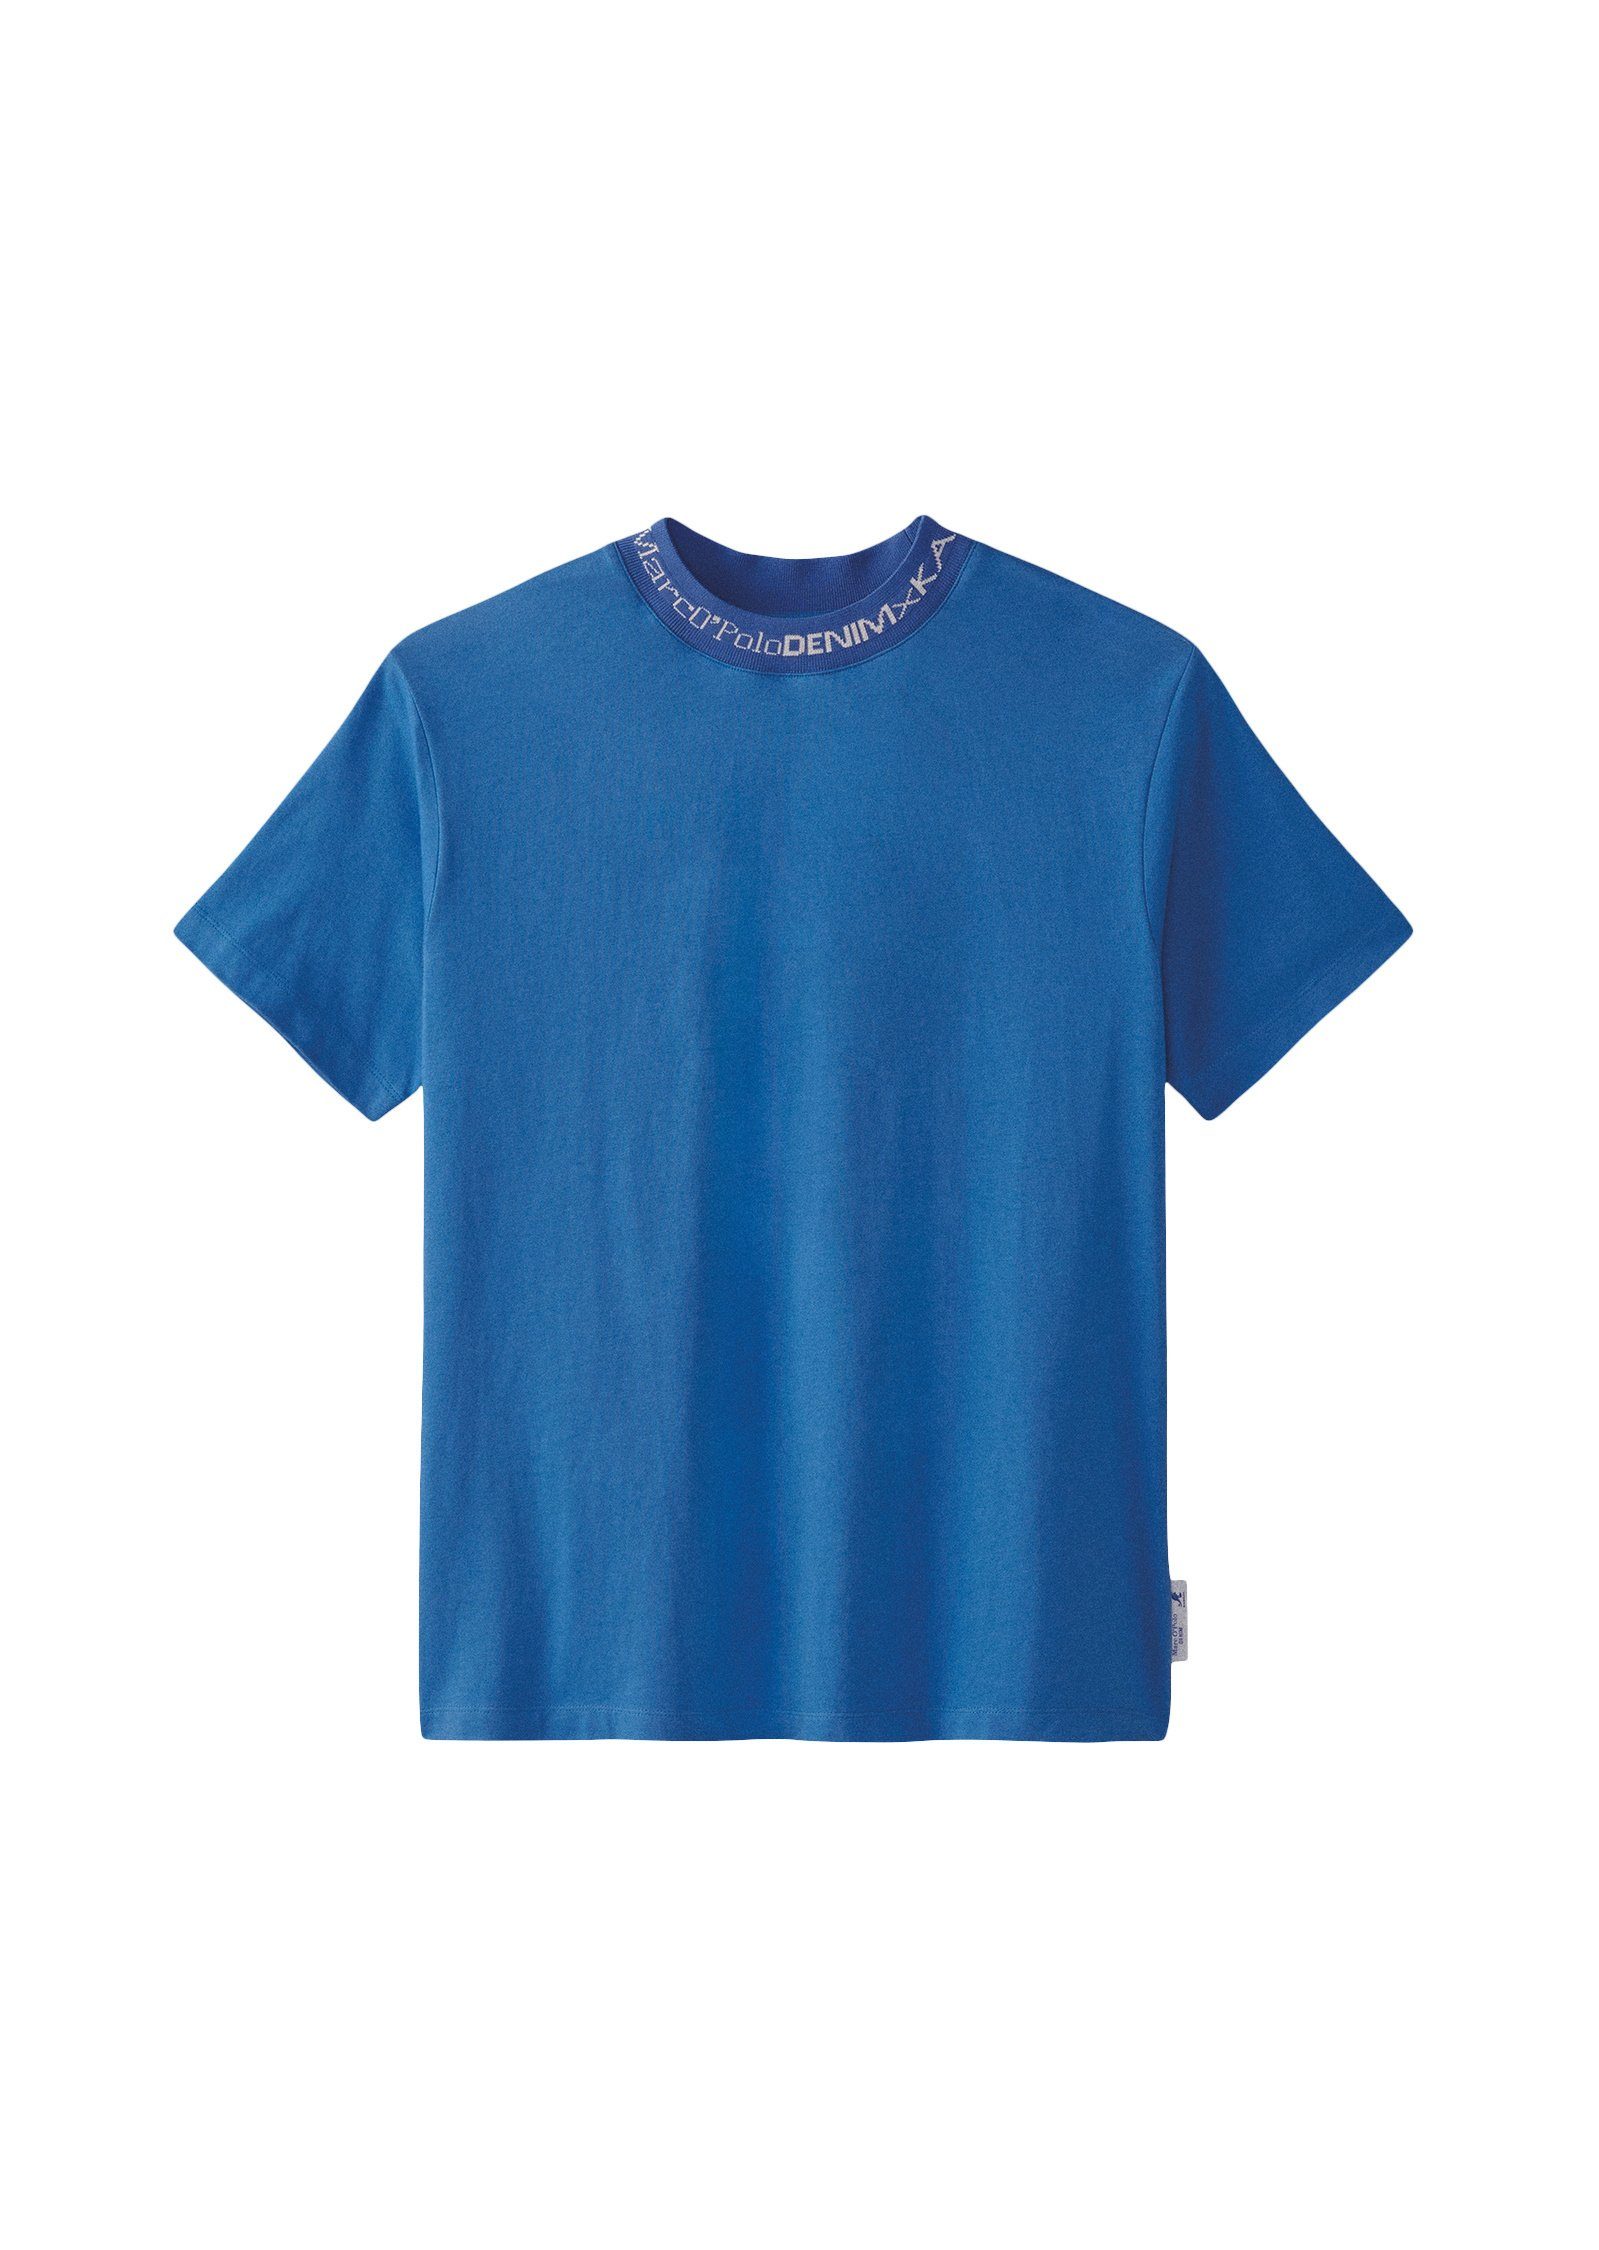 Marc O'Polo DENIM blau Rückenprint T-Shirt mit